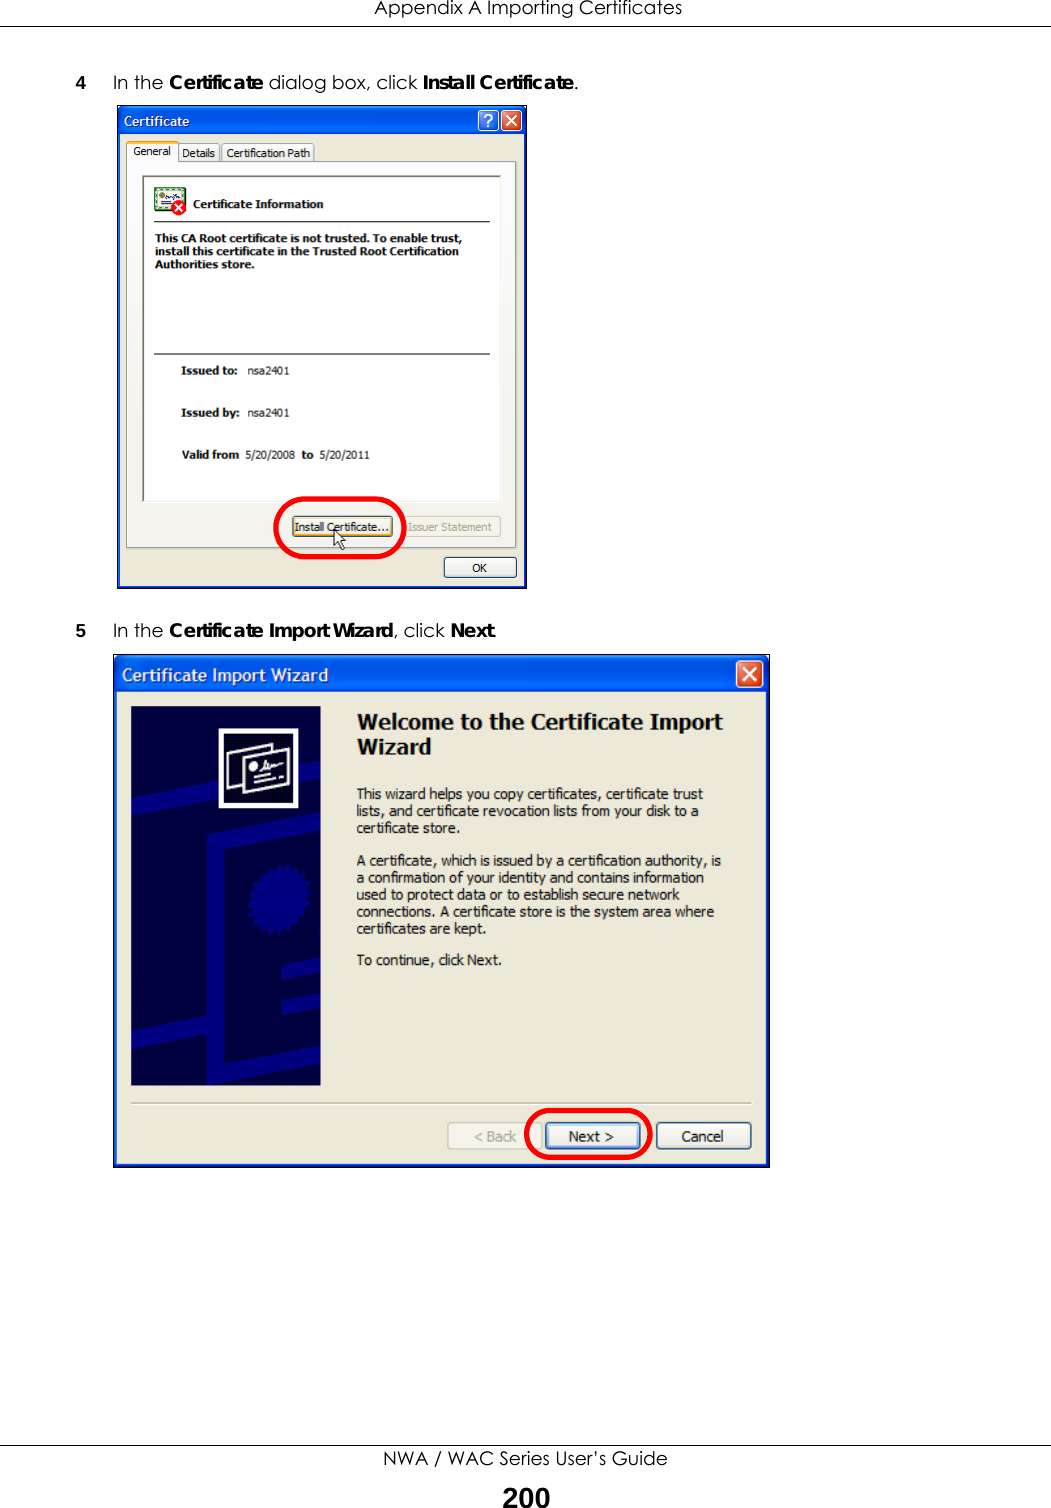  Appendix A Importing CertificatesNWA / WAC Series User’s Guide2004In the Certificate dialog box, click Install Certificate.5In the Certificate Import Wizard, click Next.